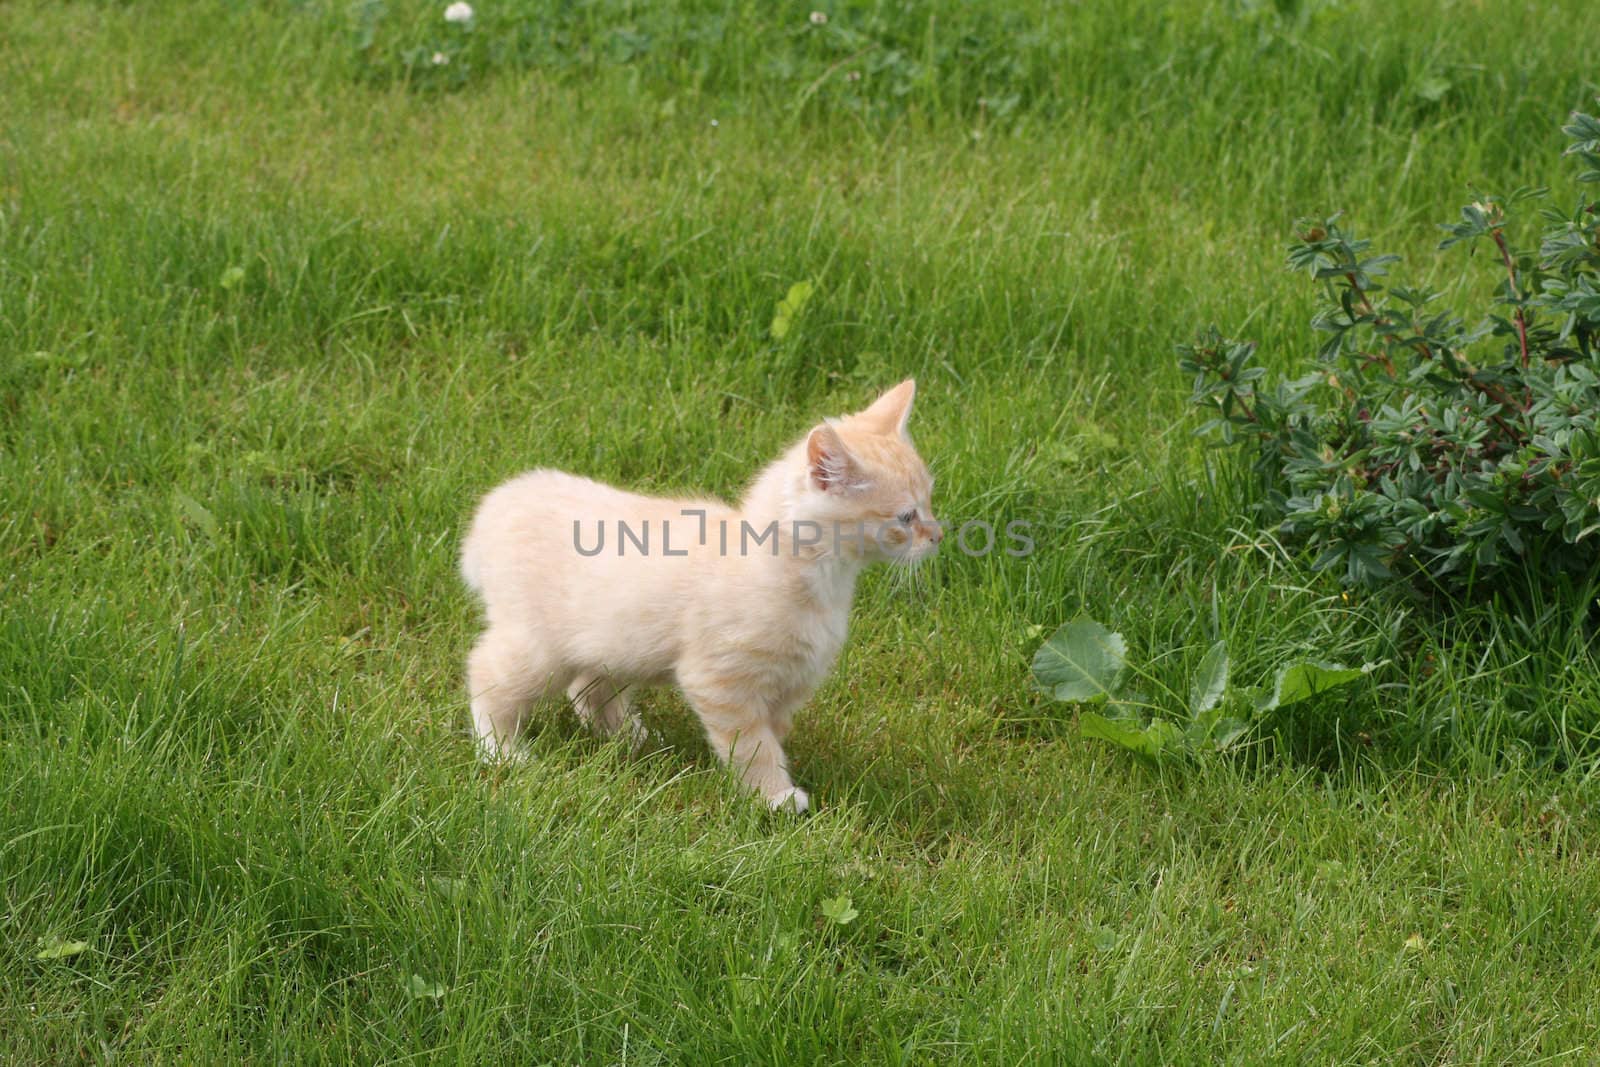 A reddish kitten curiously walking a green field